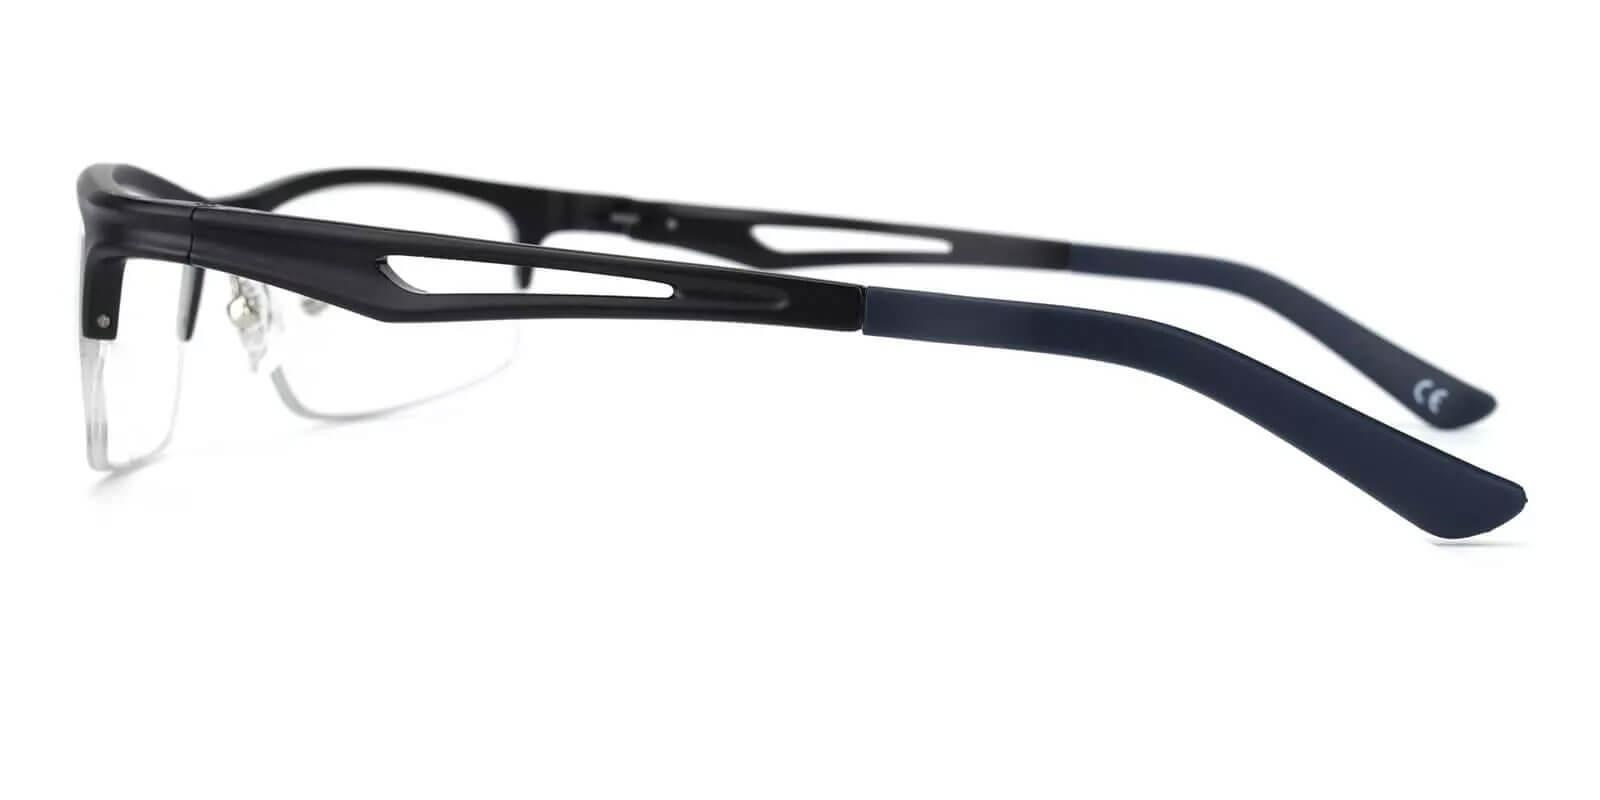 Mariner Black Metal Eyeglasses , NosePads , SpringHinges Frames from ABBE Glasses